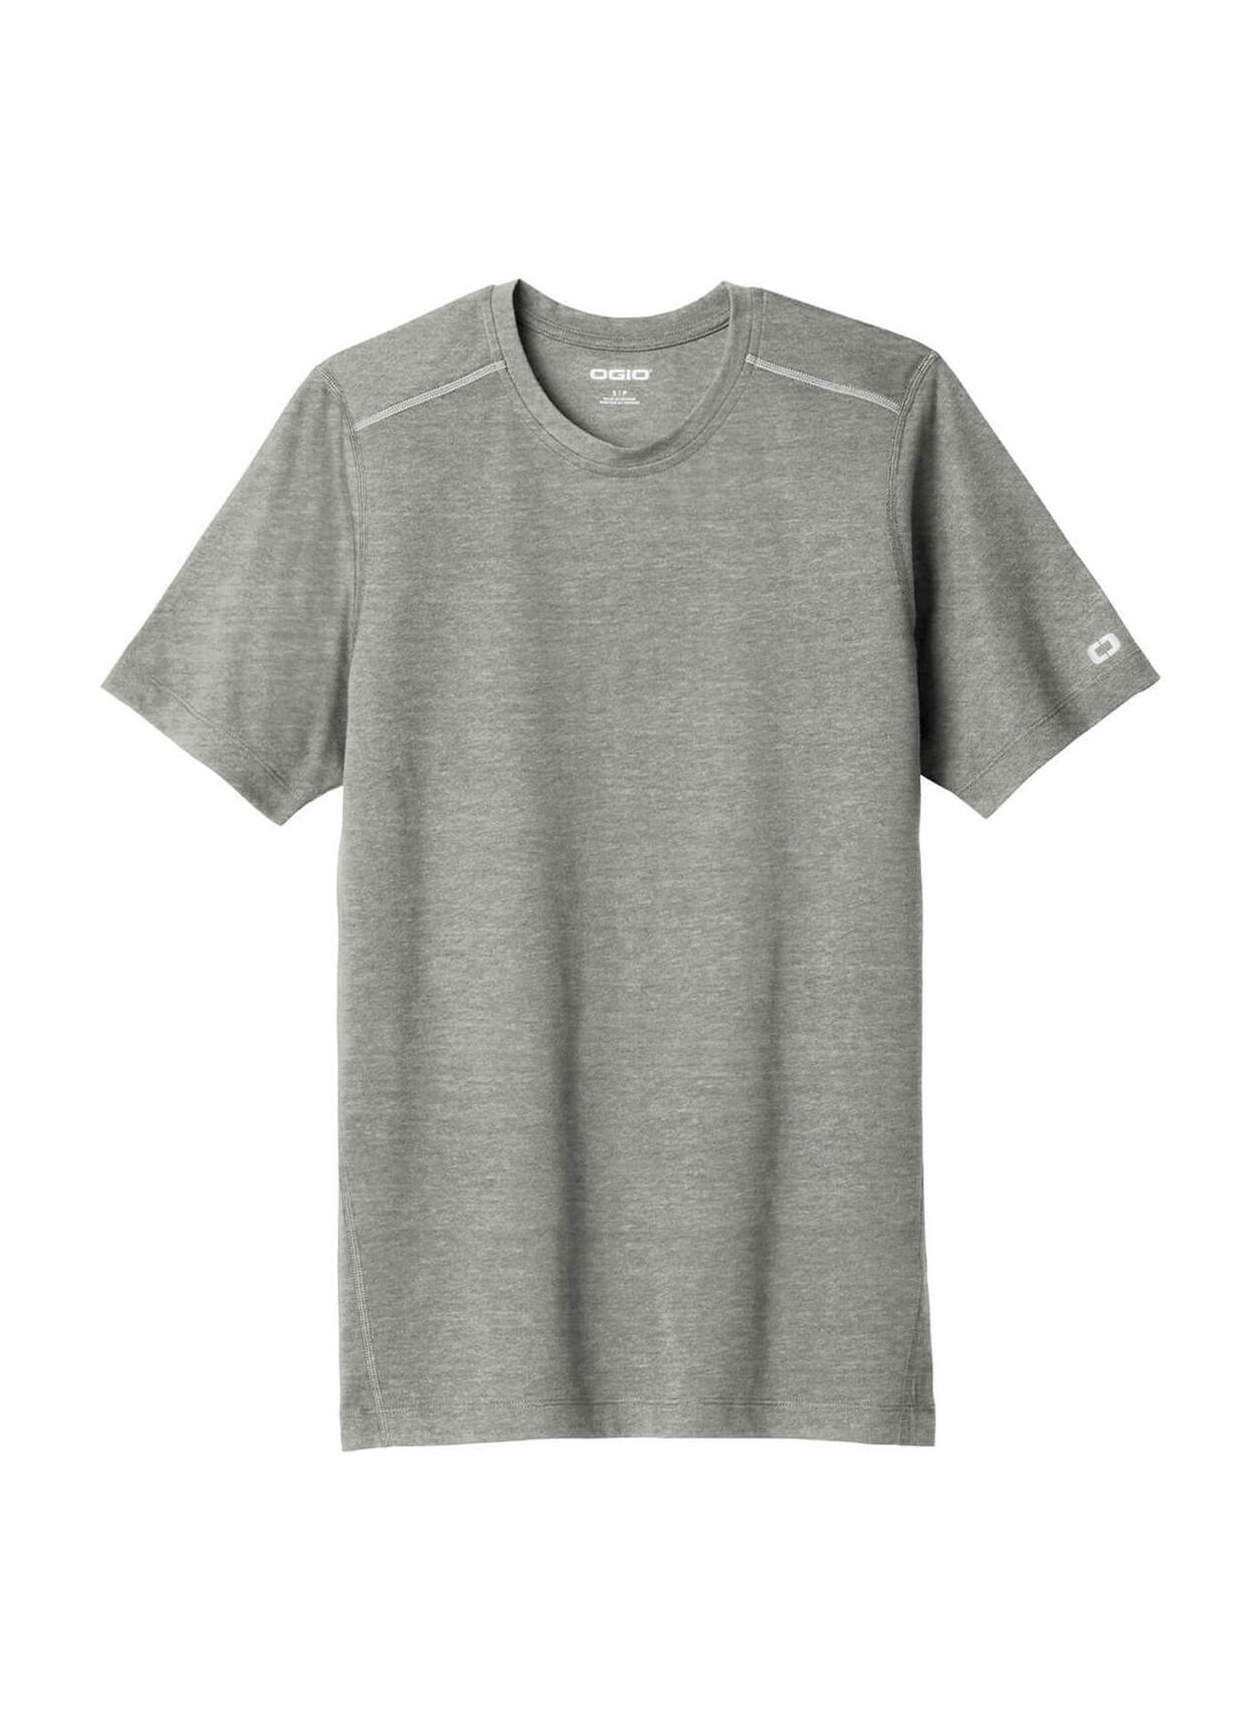 OGIO Men's Gear Grey Heather ENDURANCE Peak Short-Sleeve T-Shirt